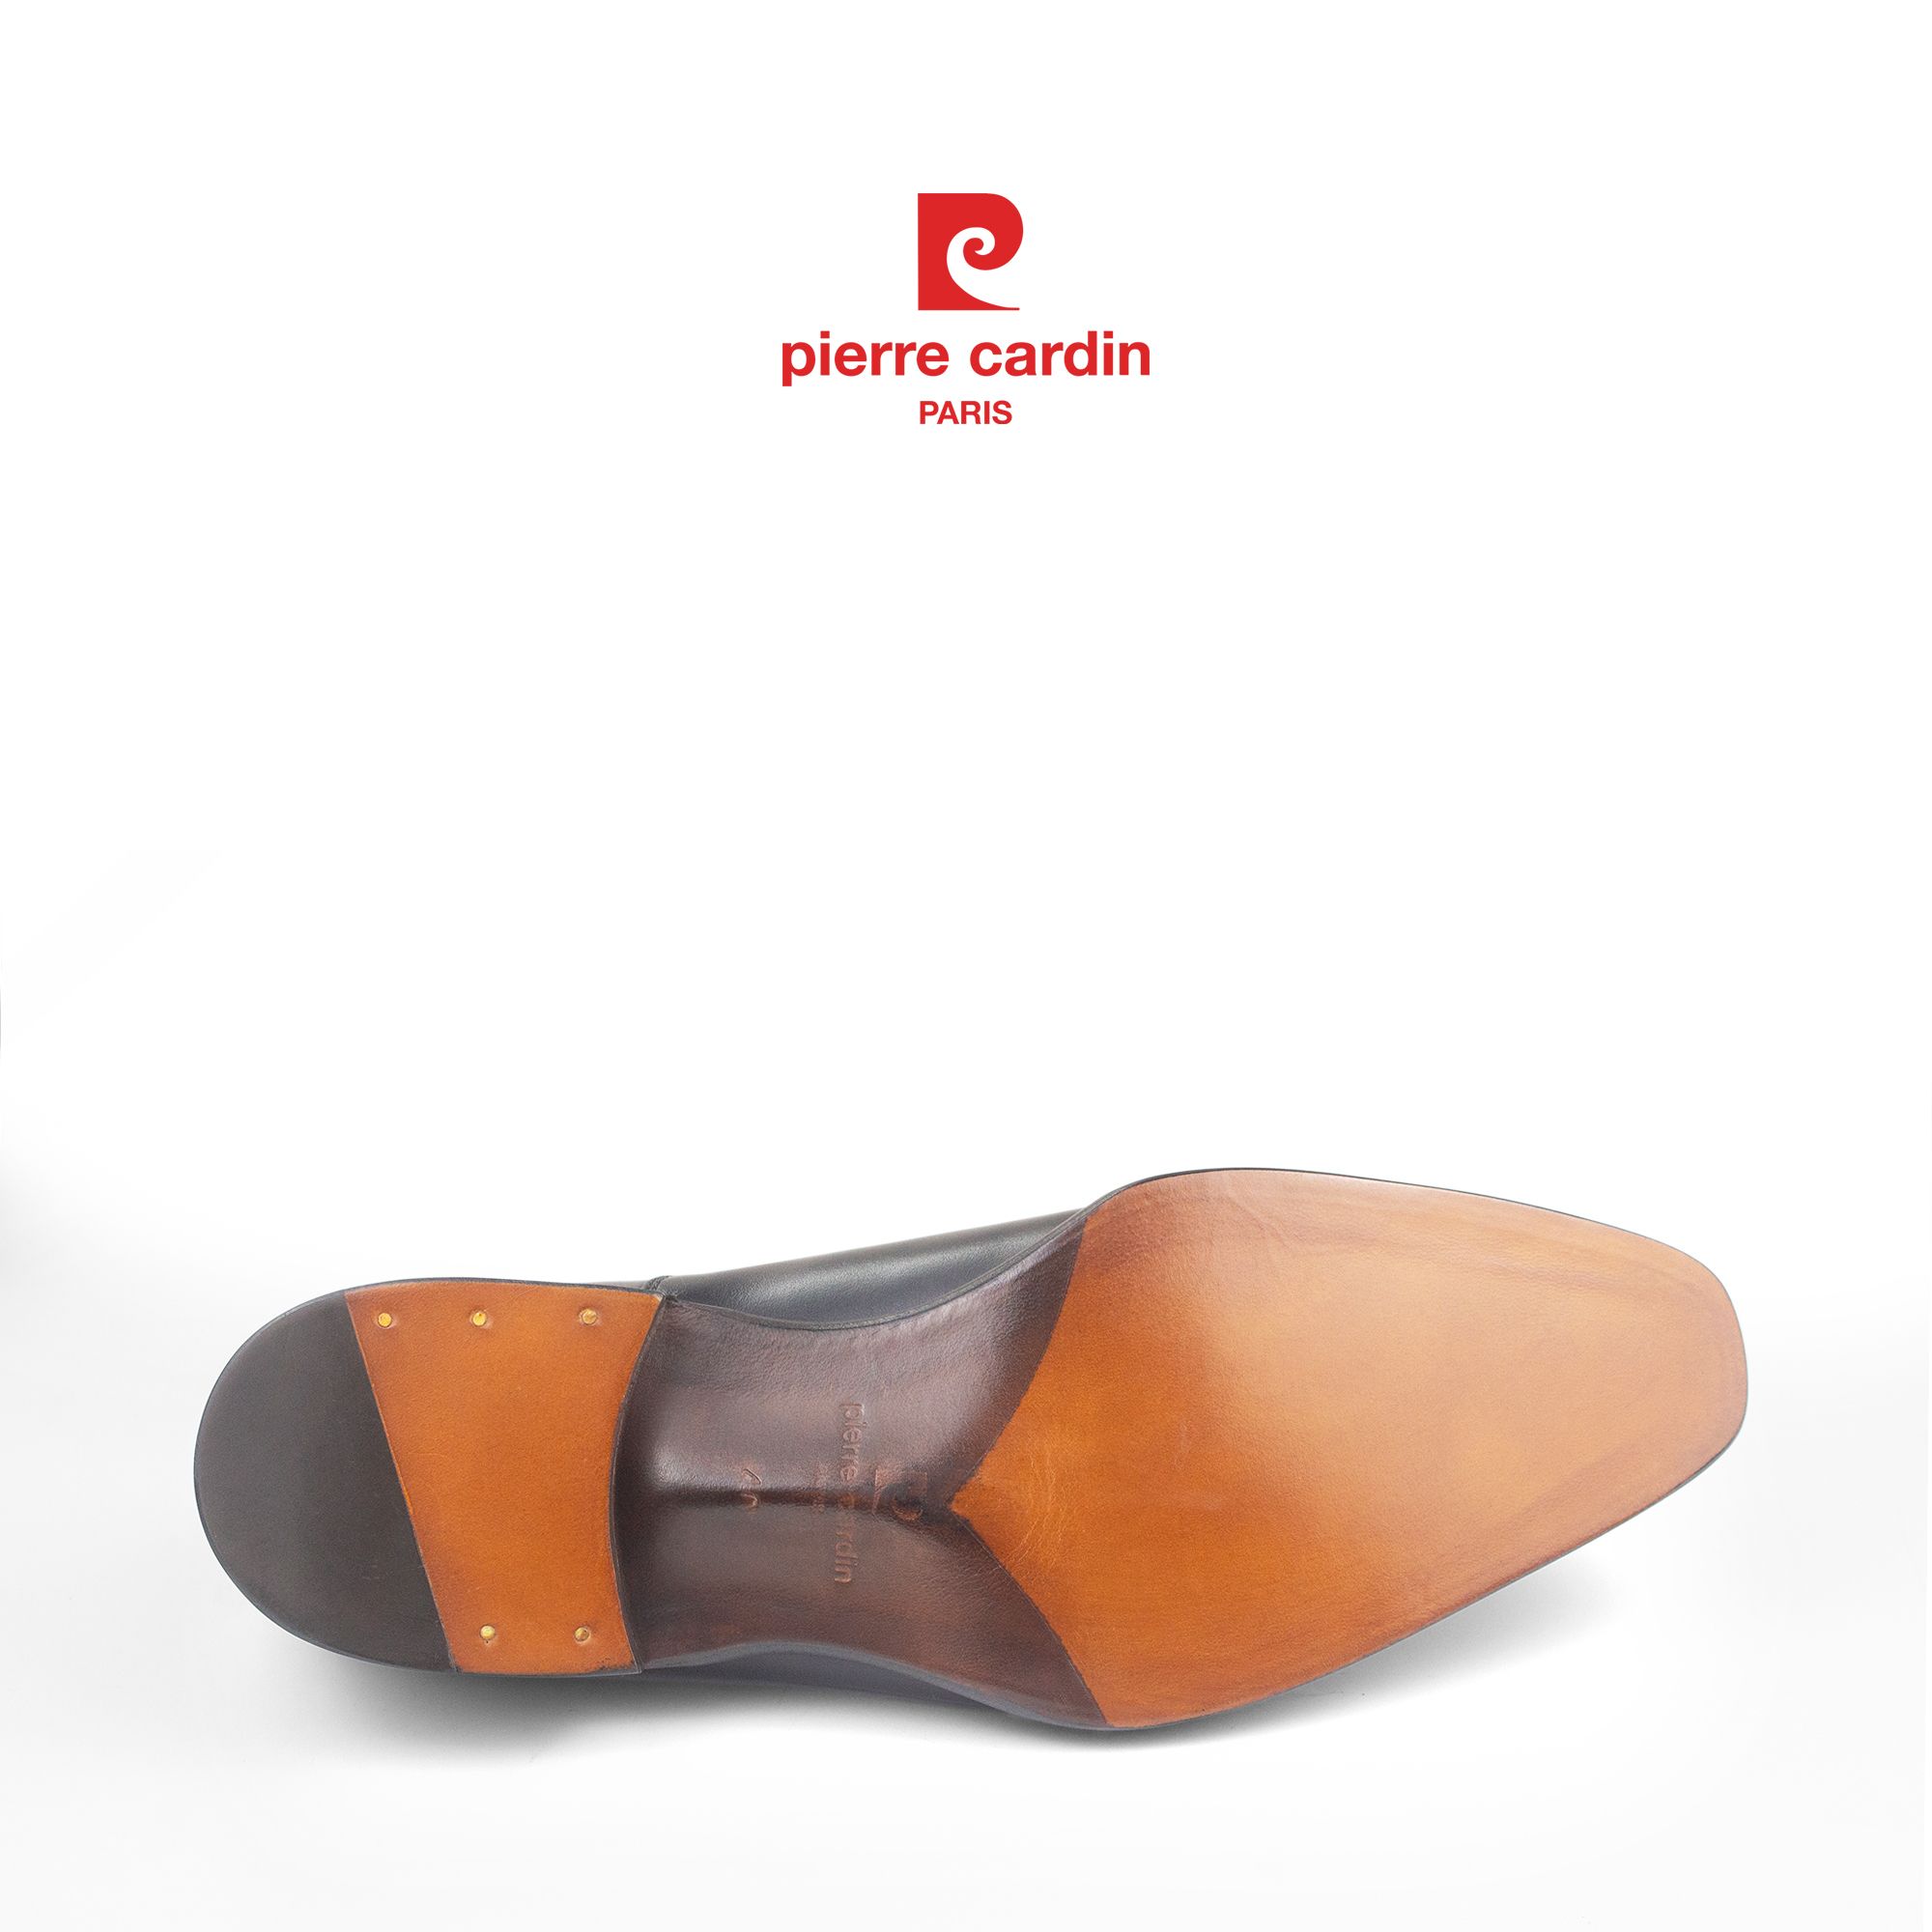 Pierre Cadin Paris Vietnam: Giày Oxford Đế Da Thượng Hạng Pierre Cardin - PCMFWLH 372 (Shoes Soles)